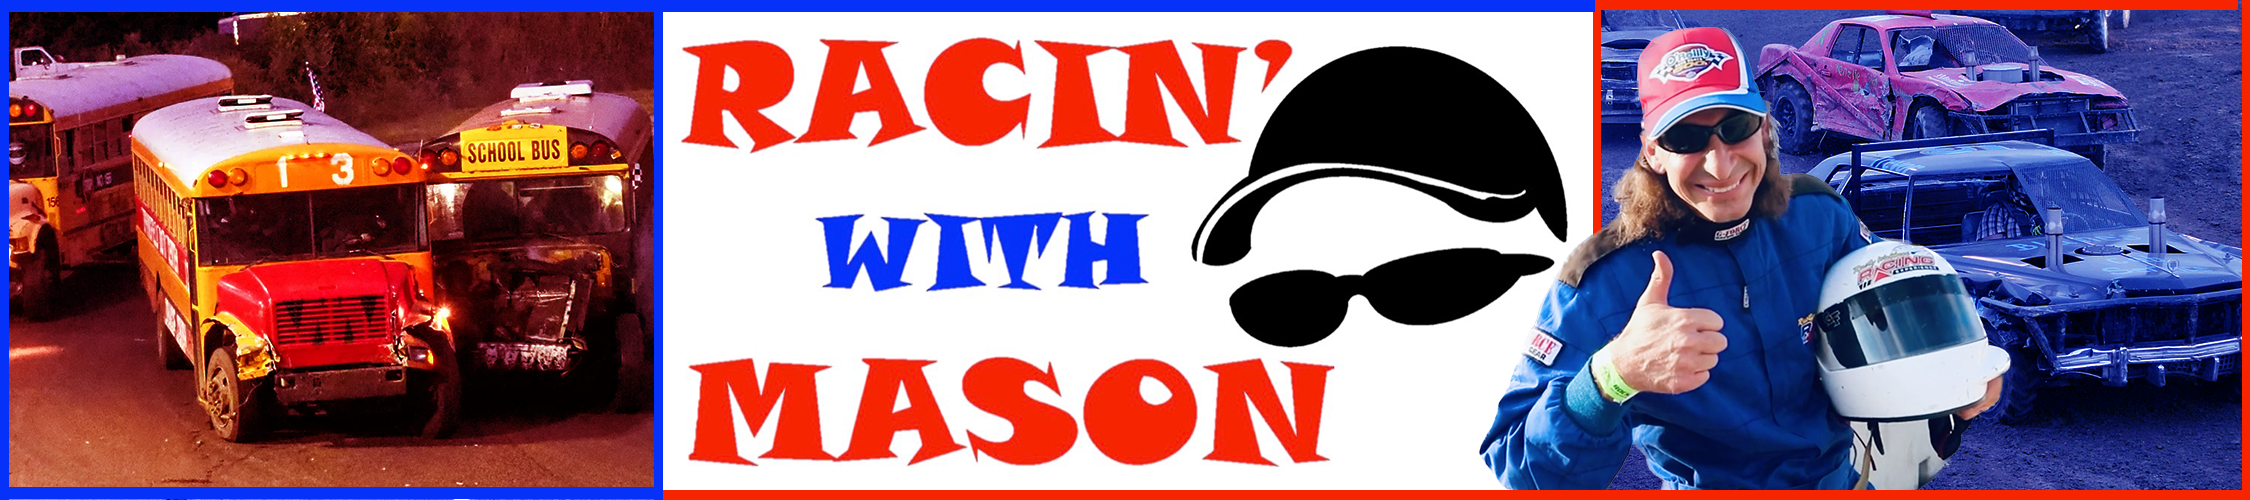 About Racin with Mason